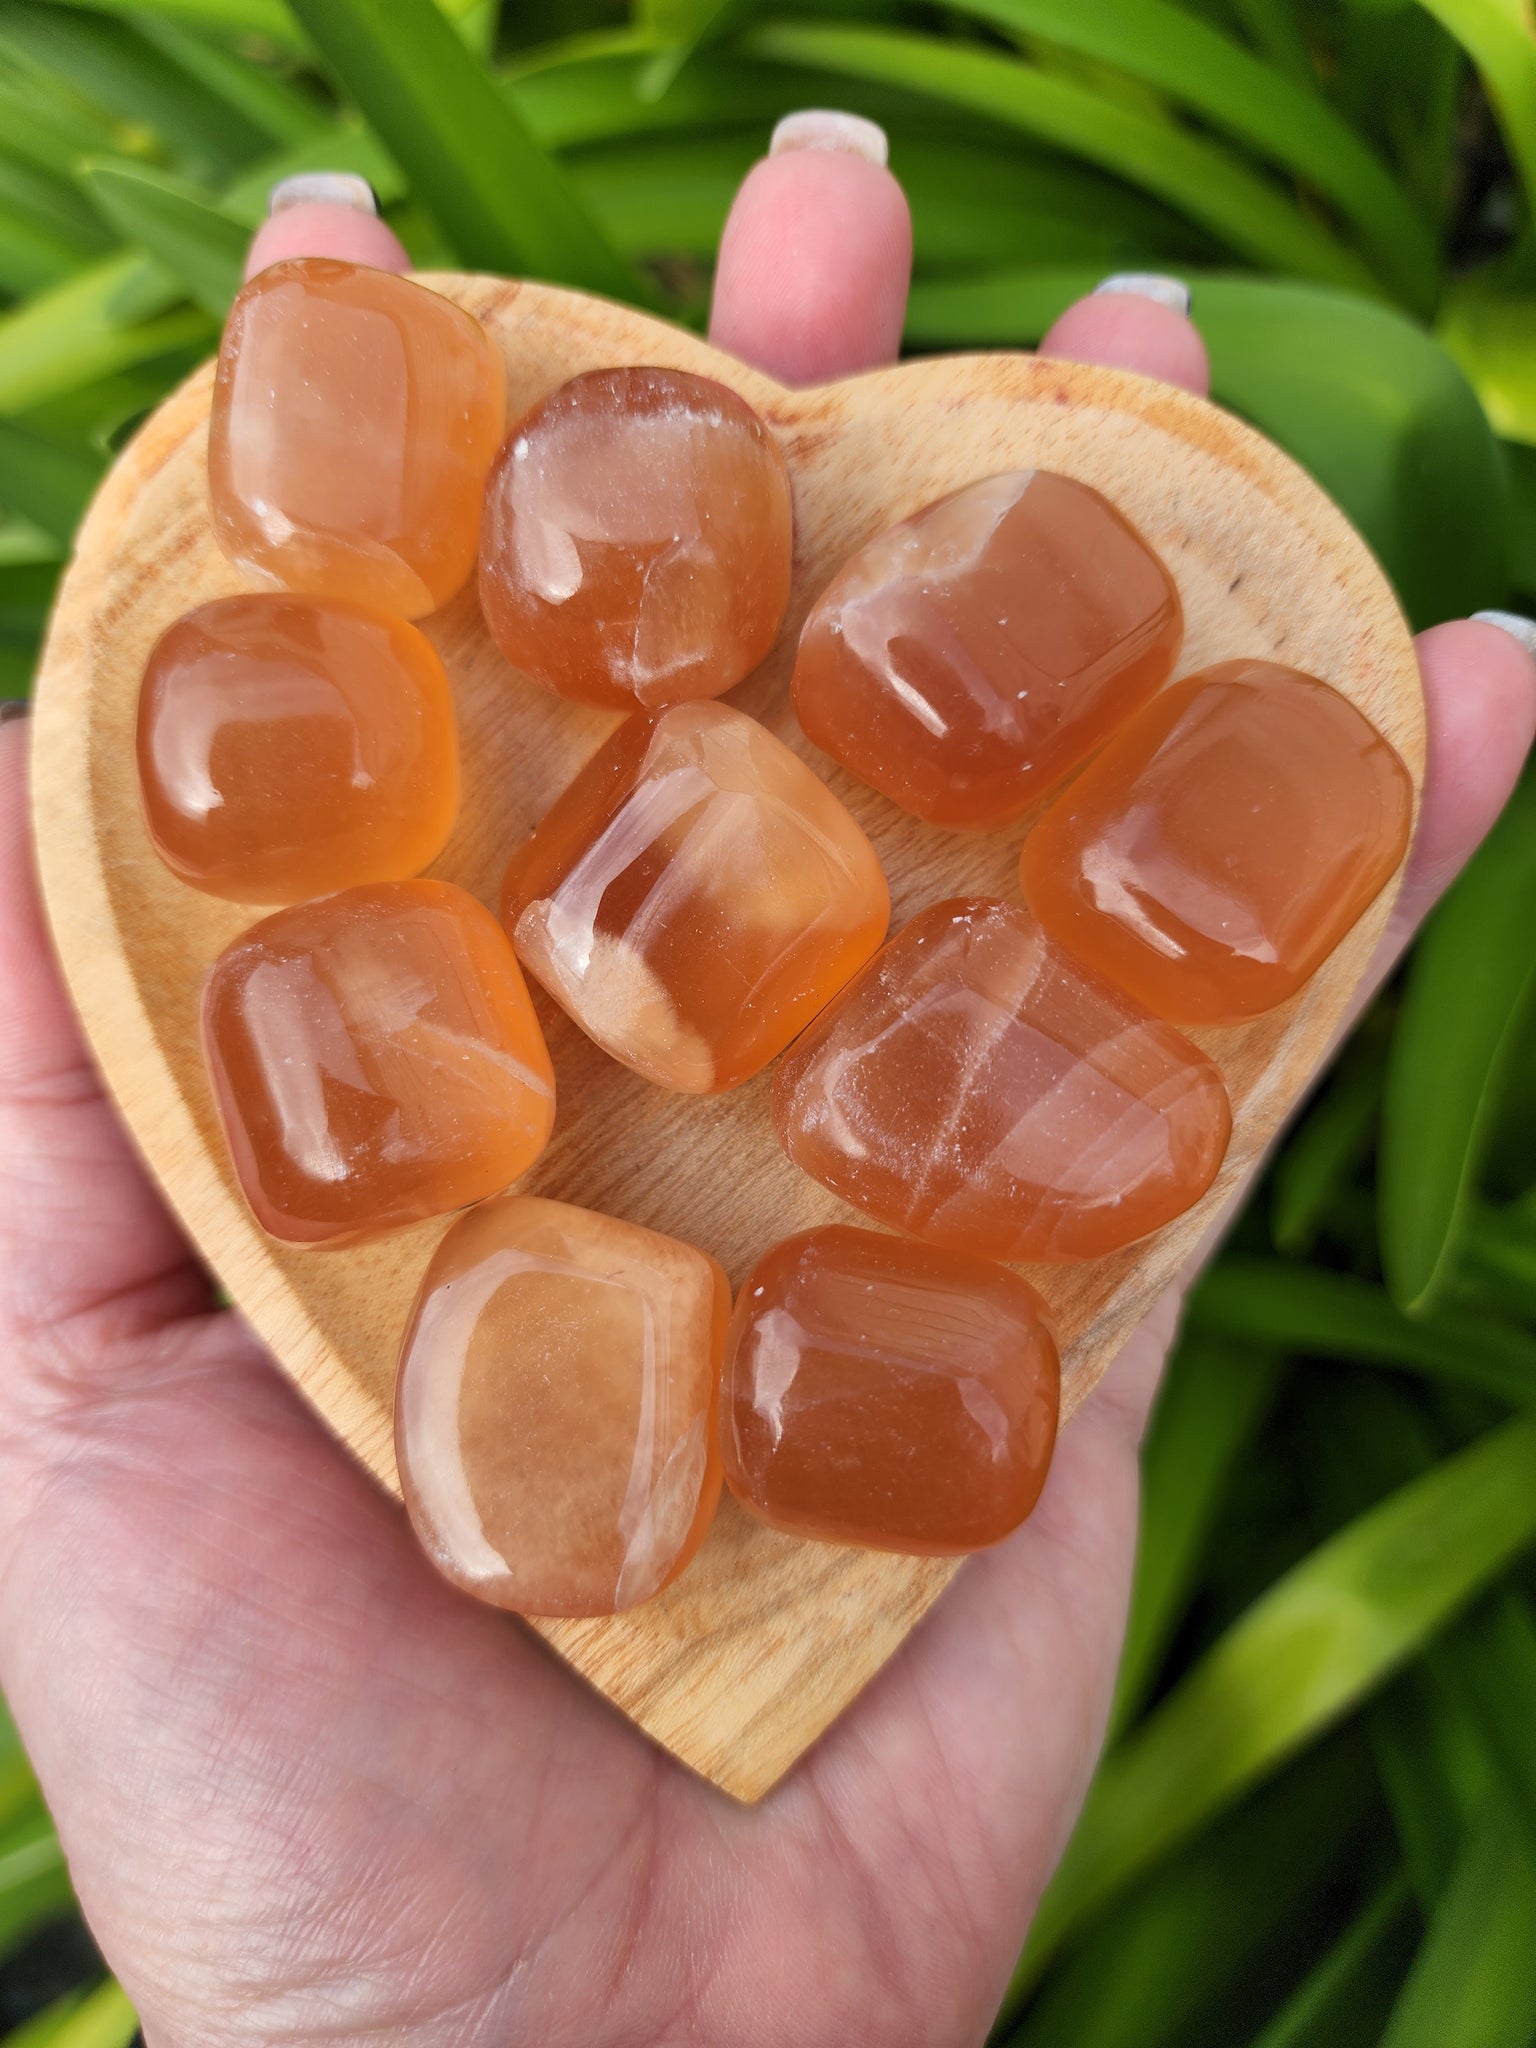 Honey Calcite Tumbled Stone